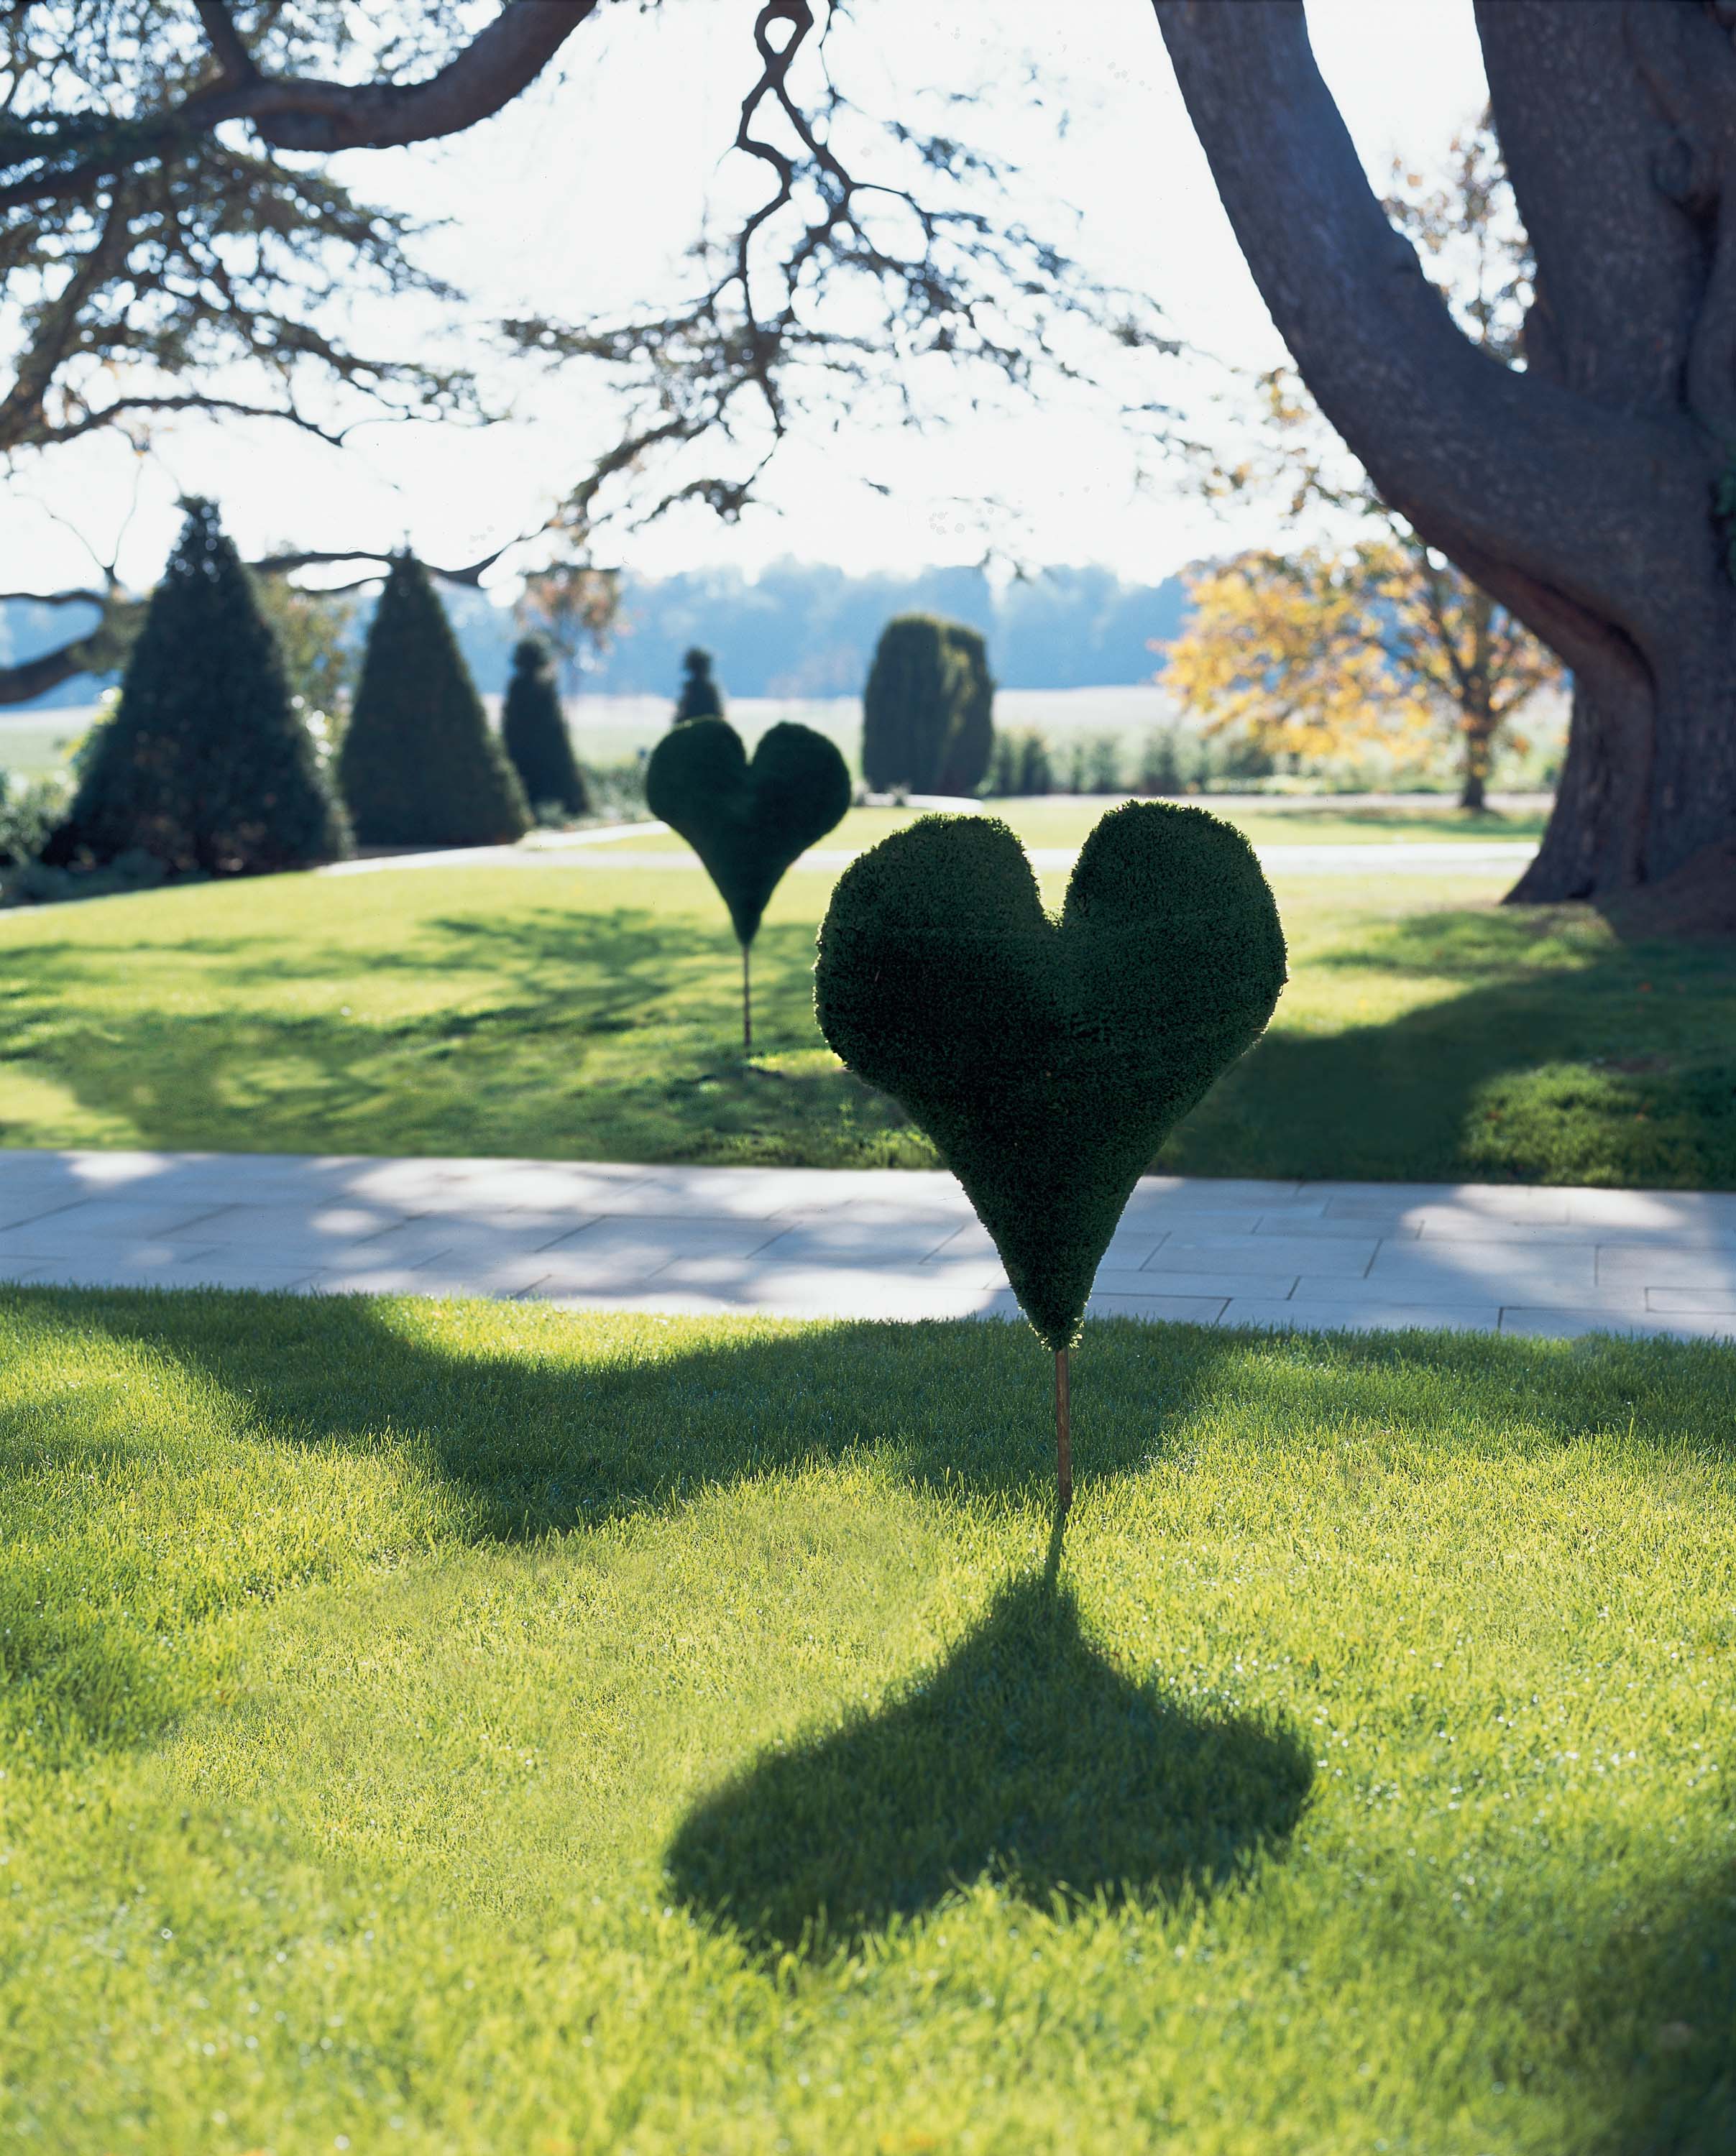 The Grove's heart hedge